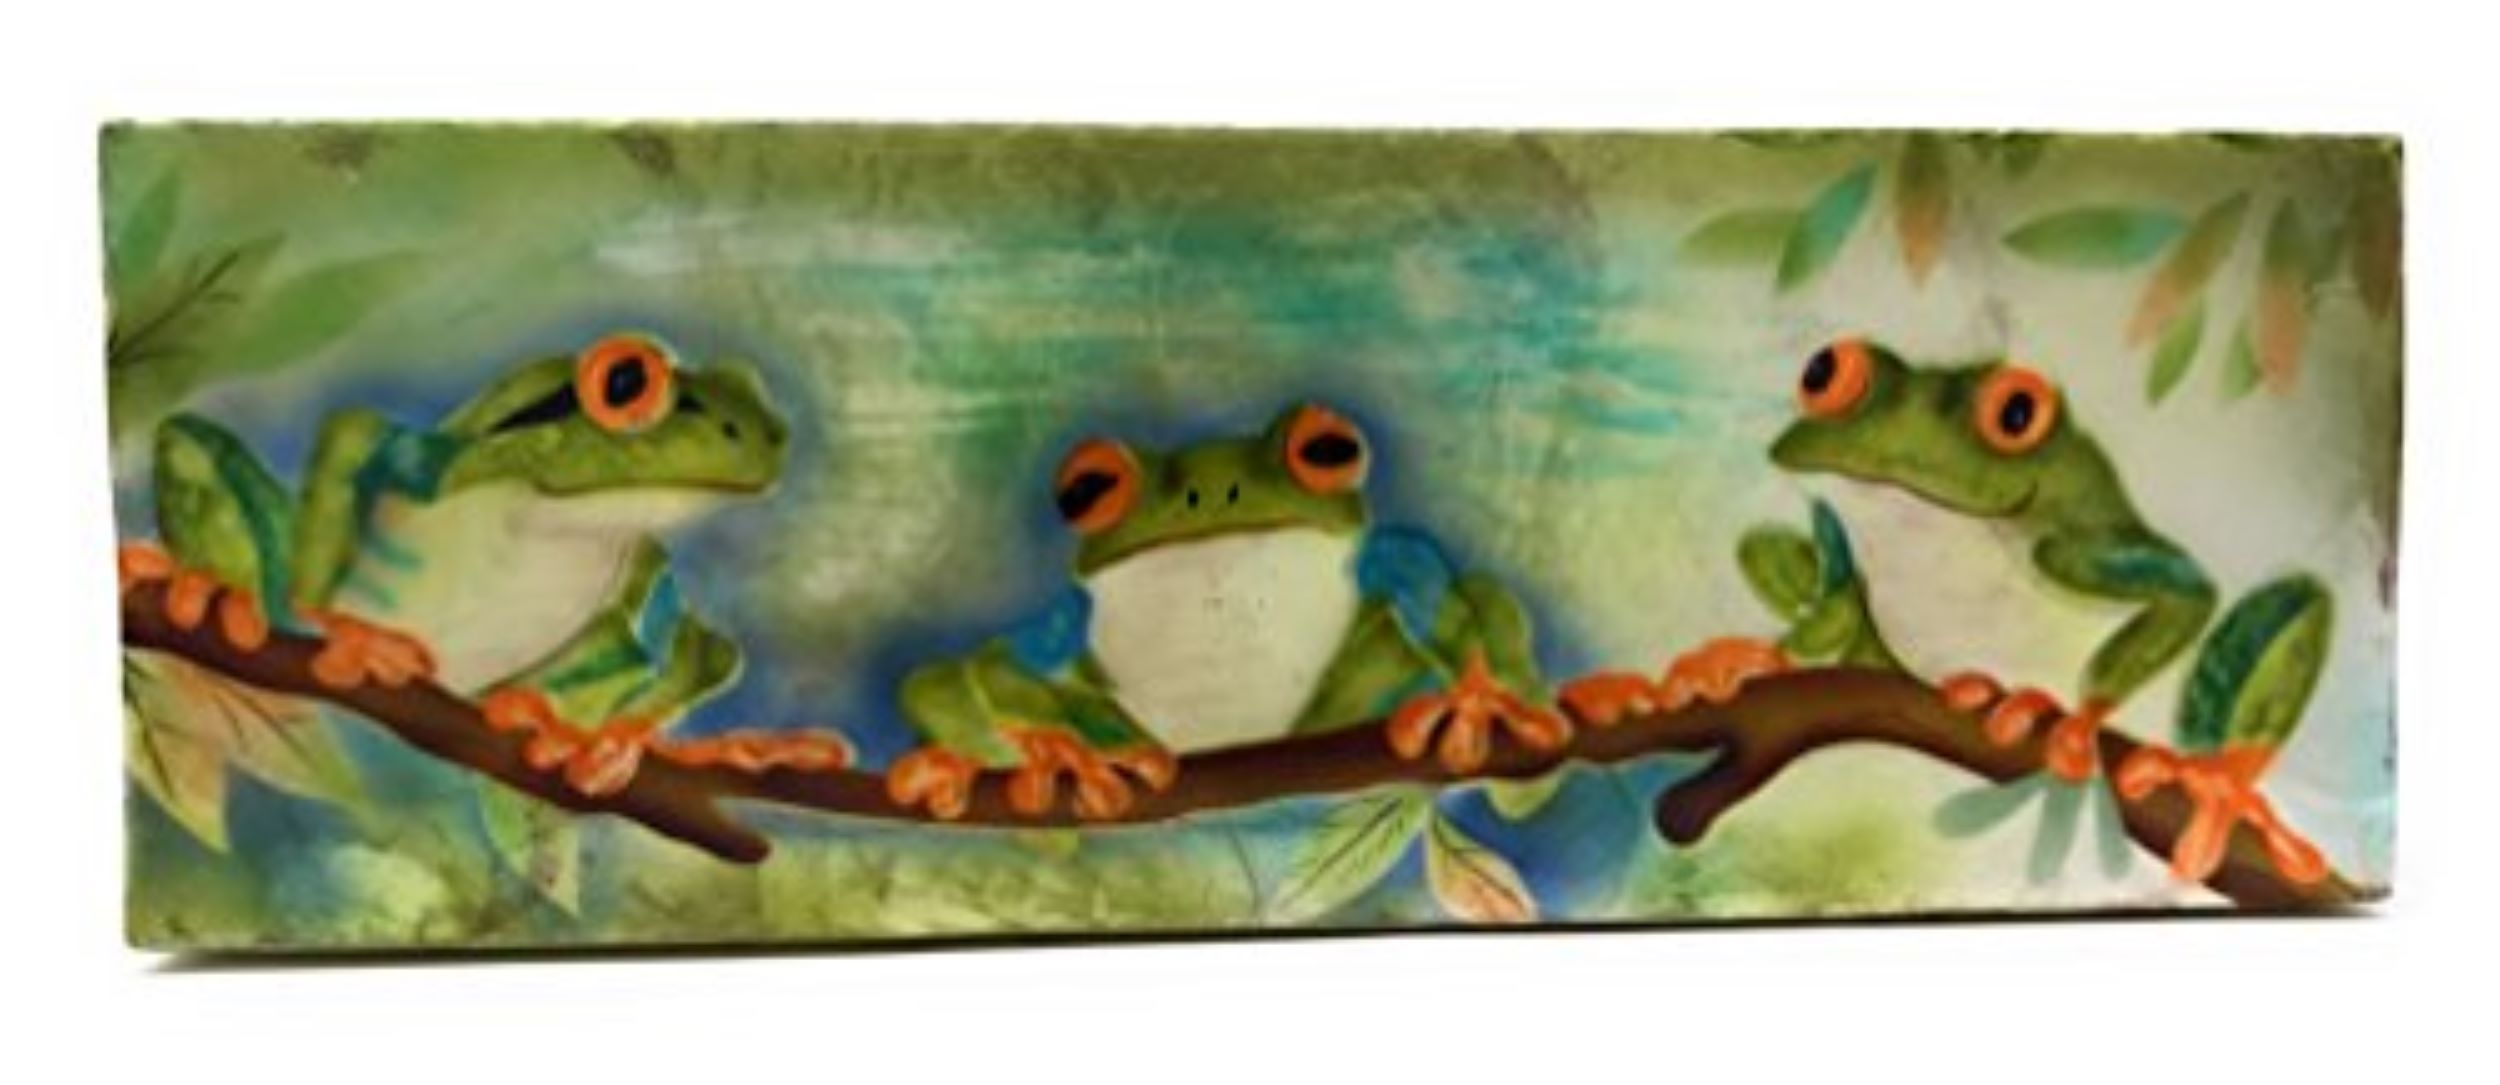 
Tree Frogs Capiz Shell Keepsake Box